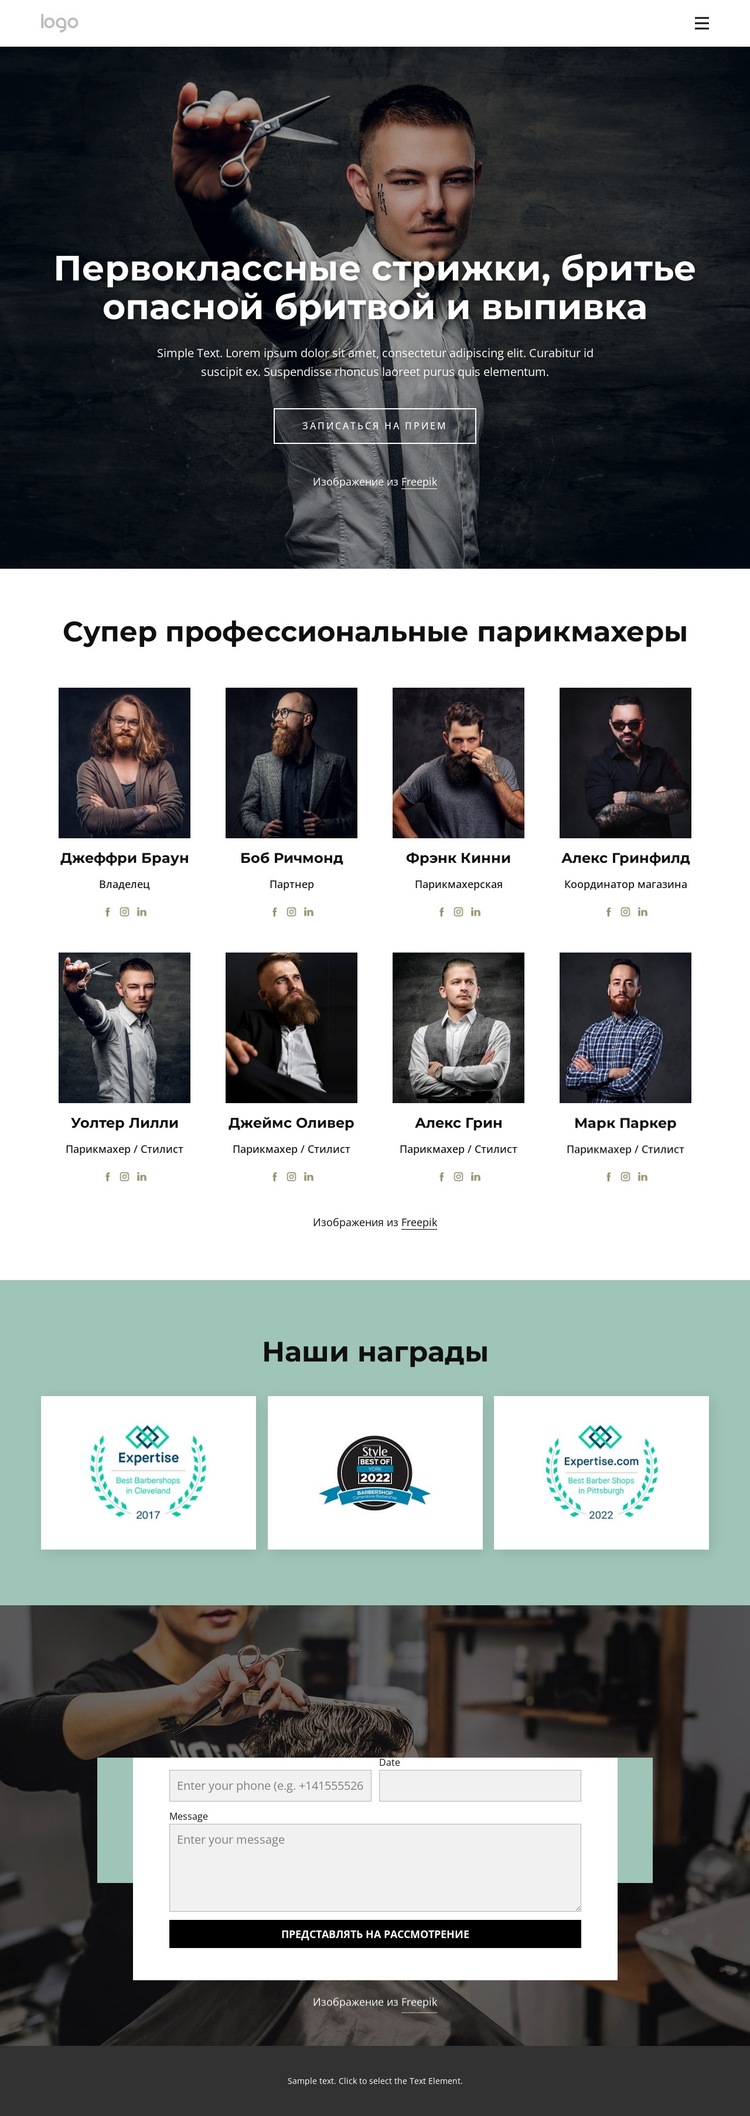 Команда парикмахеров Шаблон веб-сайта